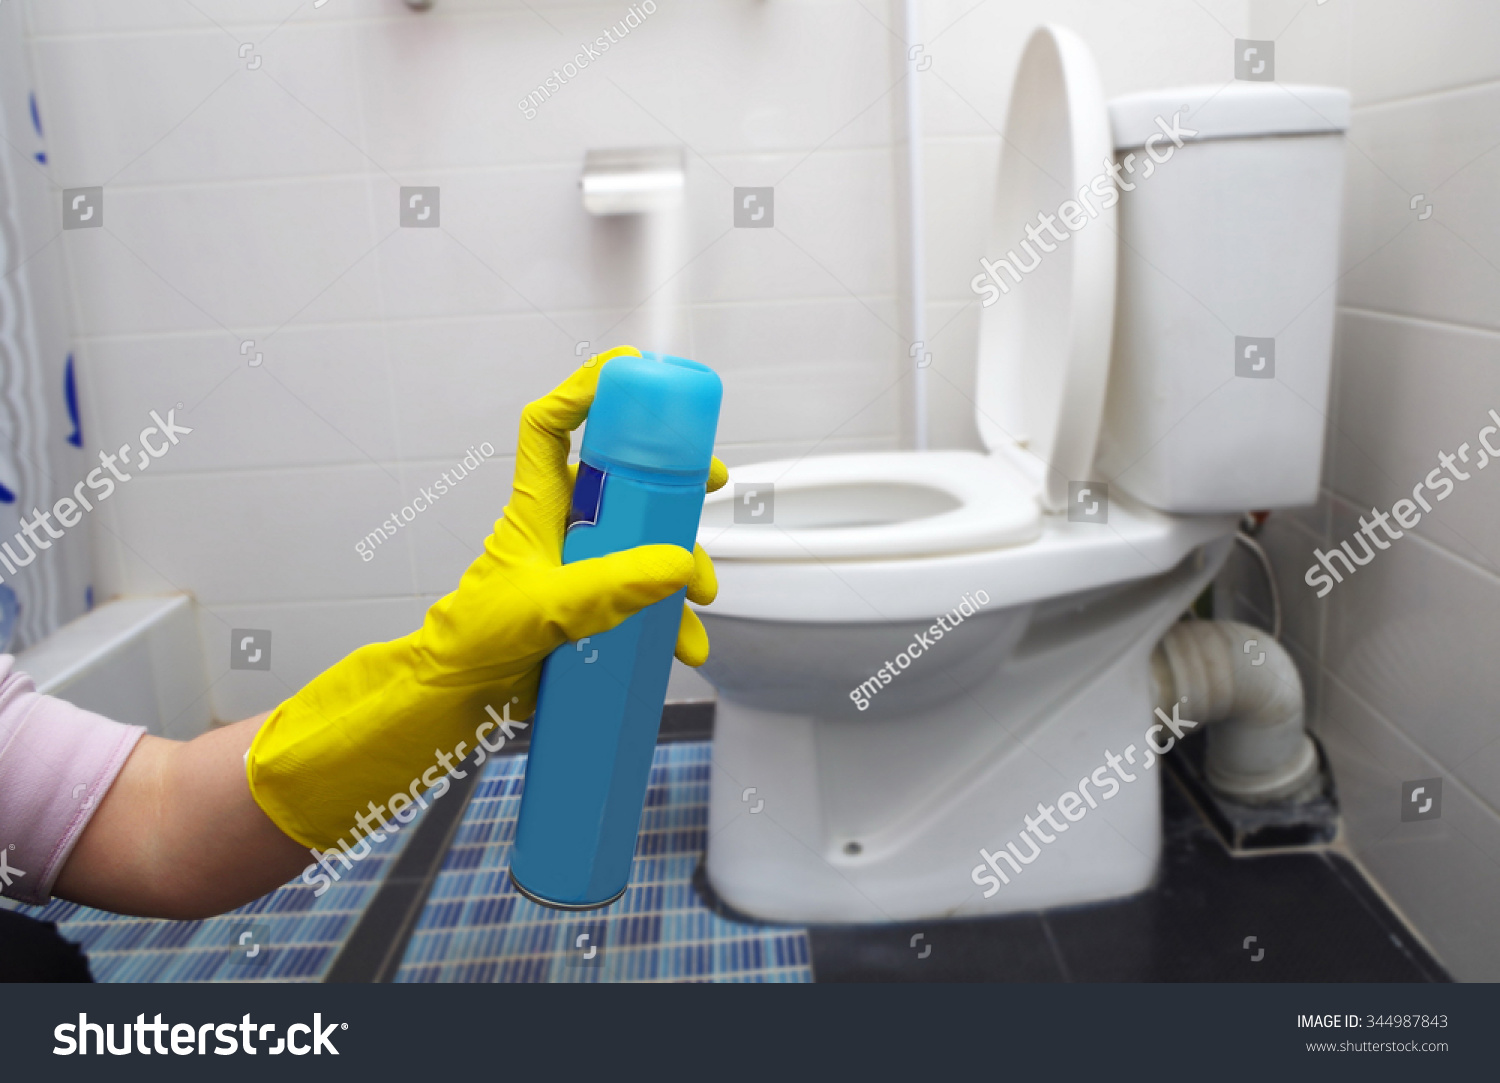 air freshner in hand in toilet #344987843